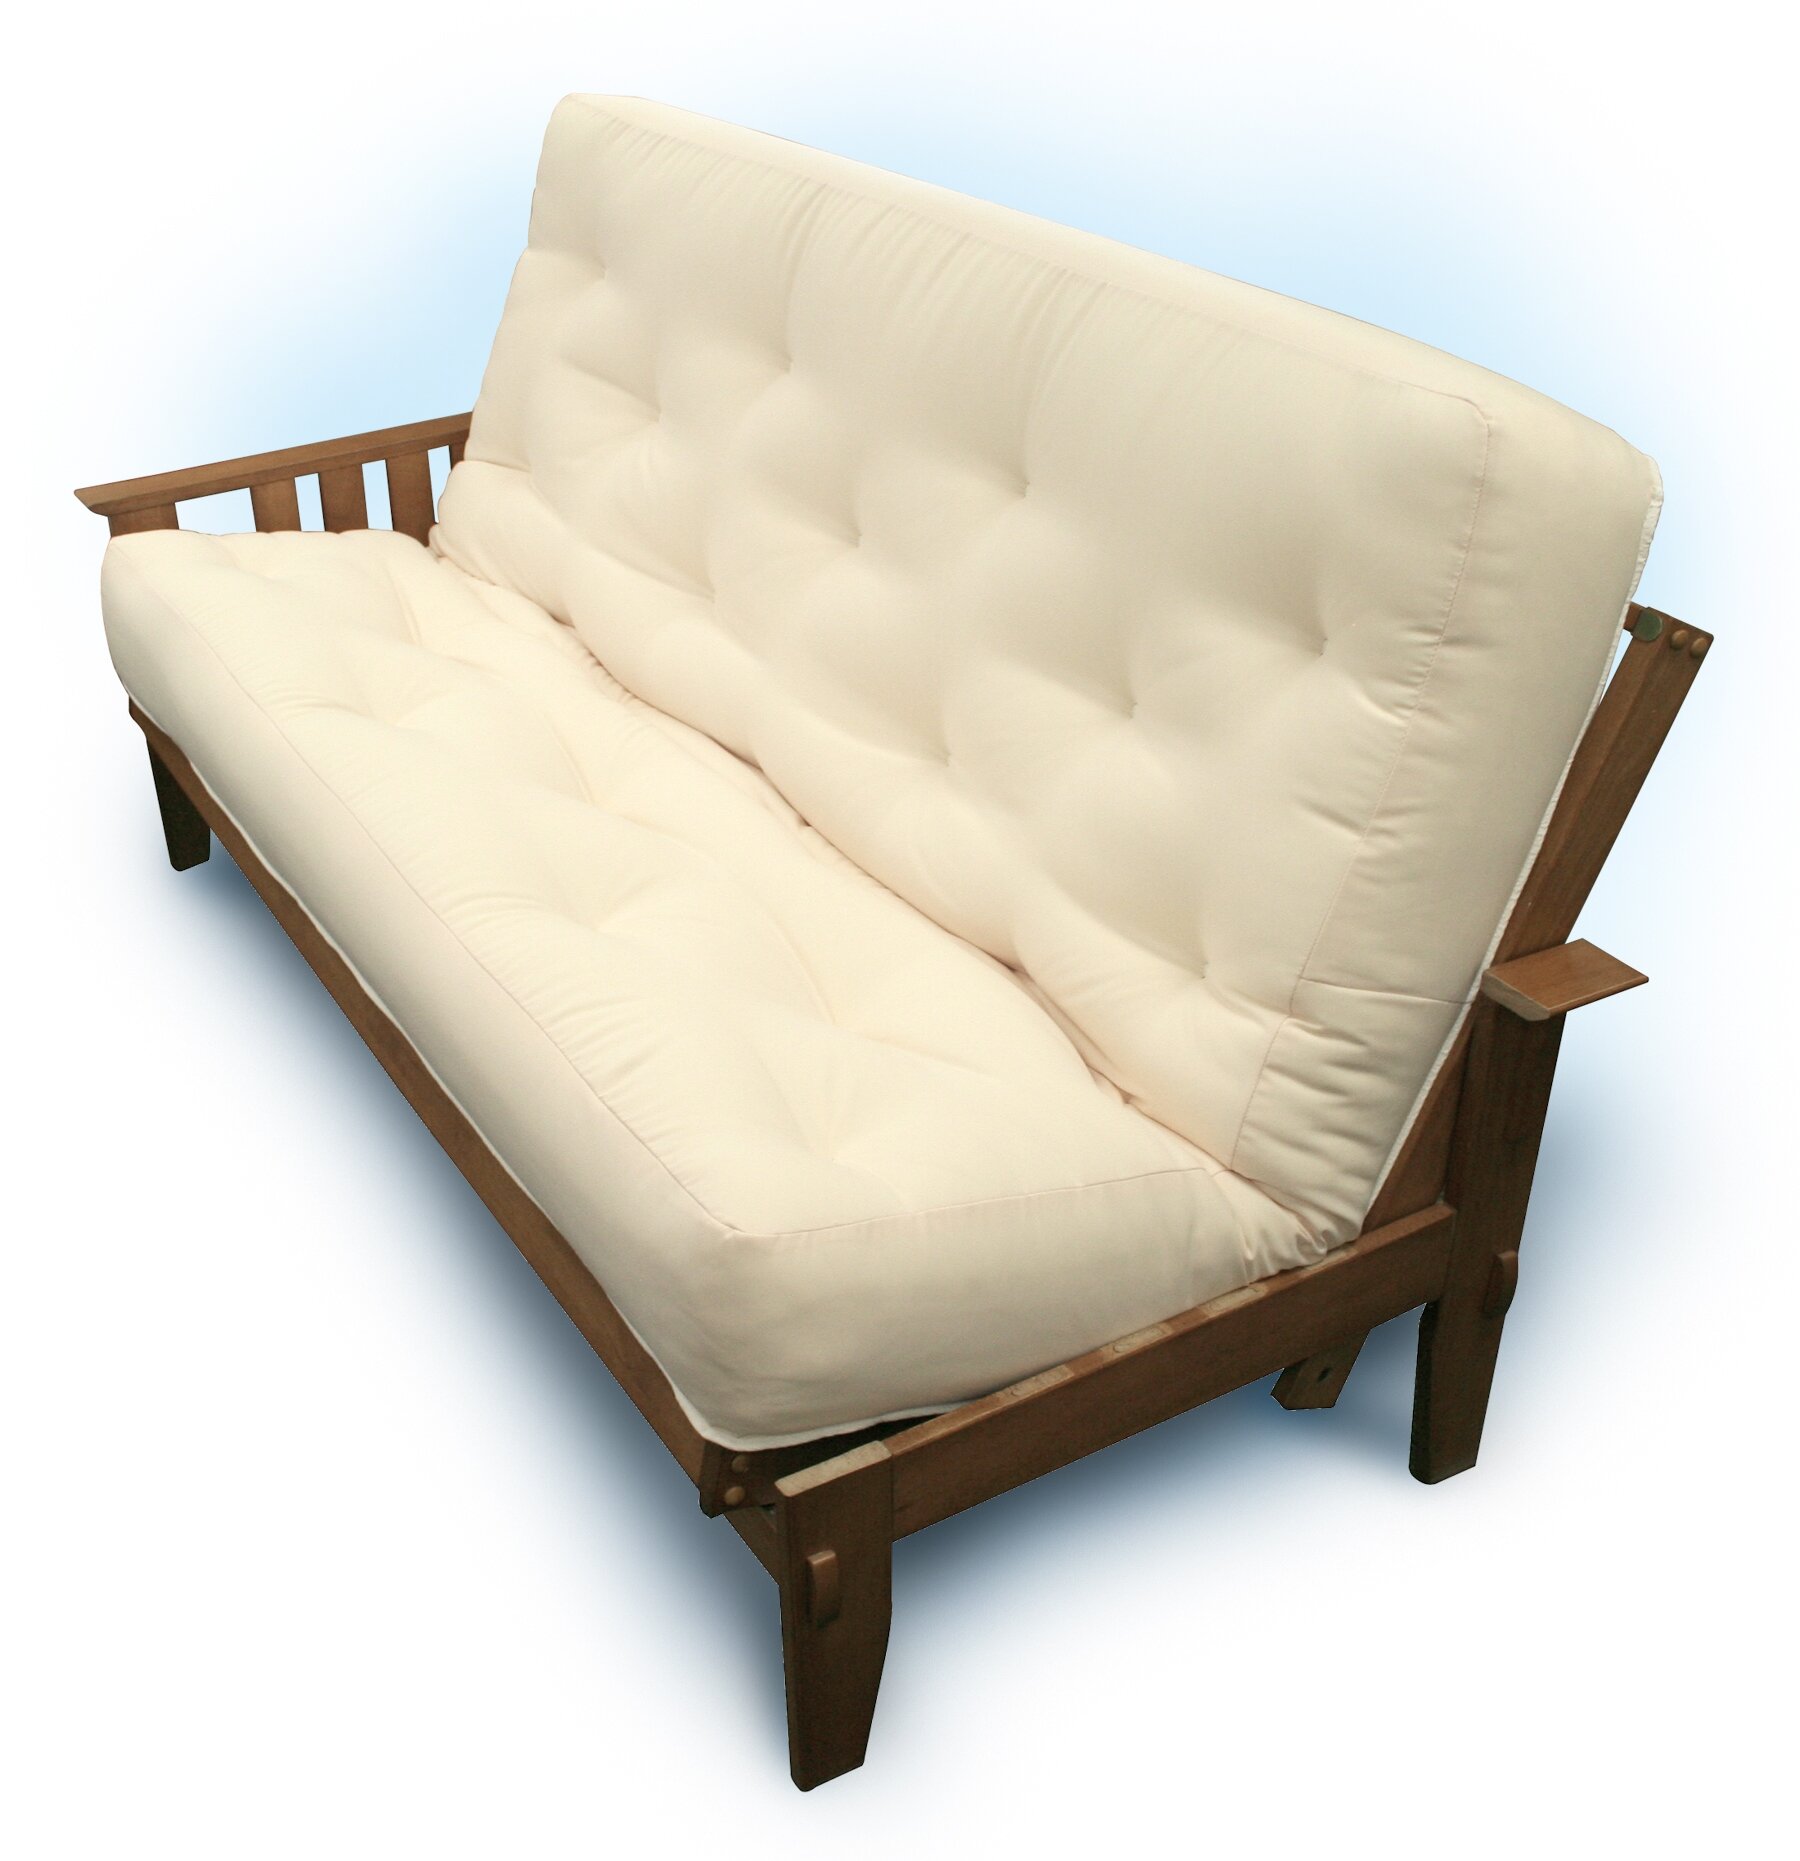 Magnificent genuine leather futon covers Bio Sleep Concept Standard Couch Futon Mattress With Cotton